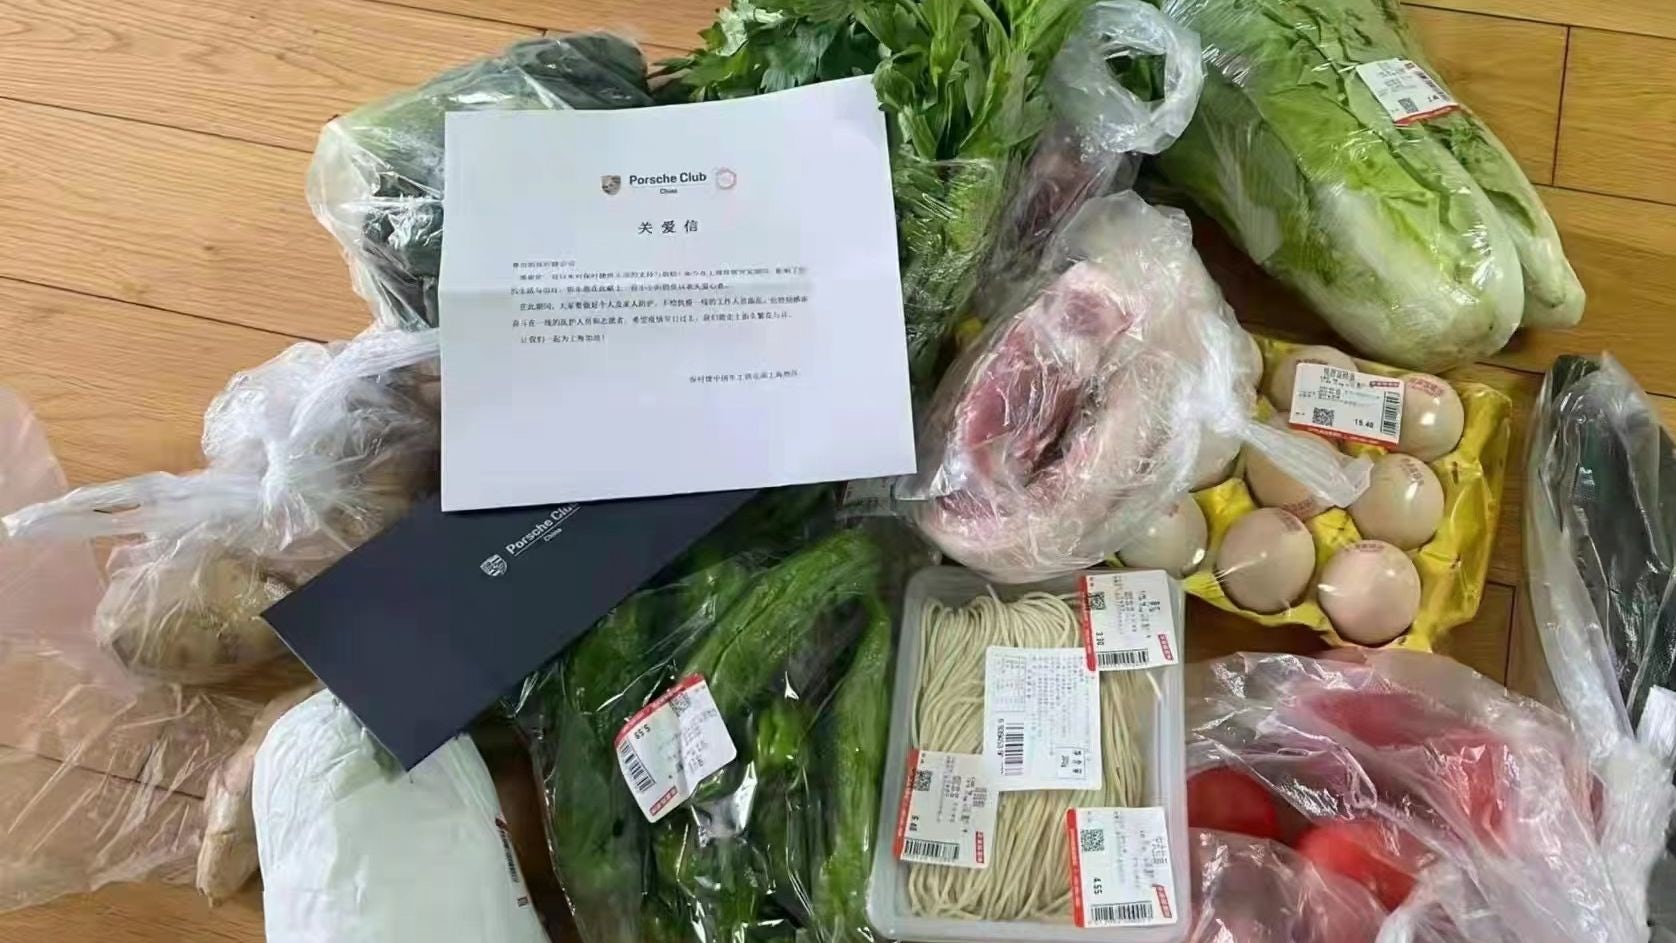 As Shanghai Locks Down, Netizens Are Equating Vegetables to Luxury